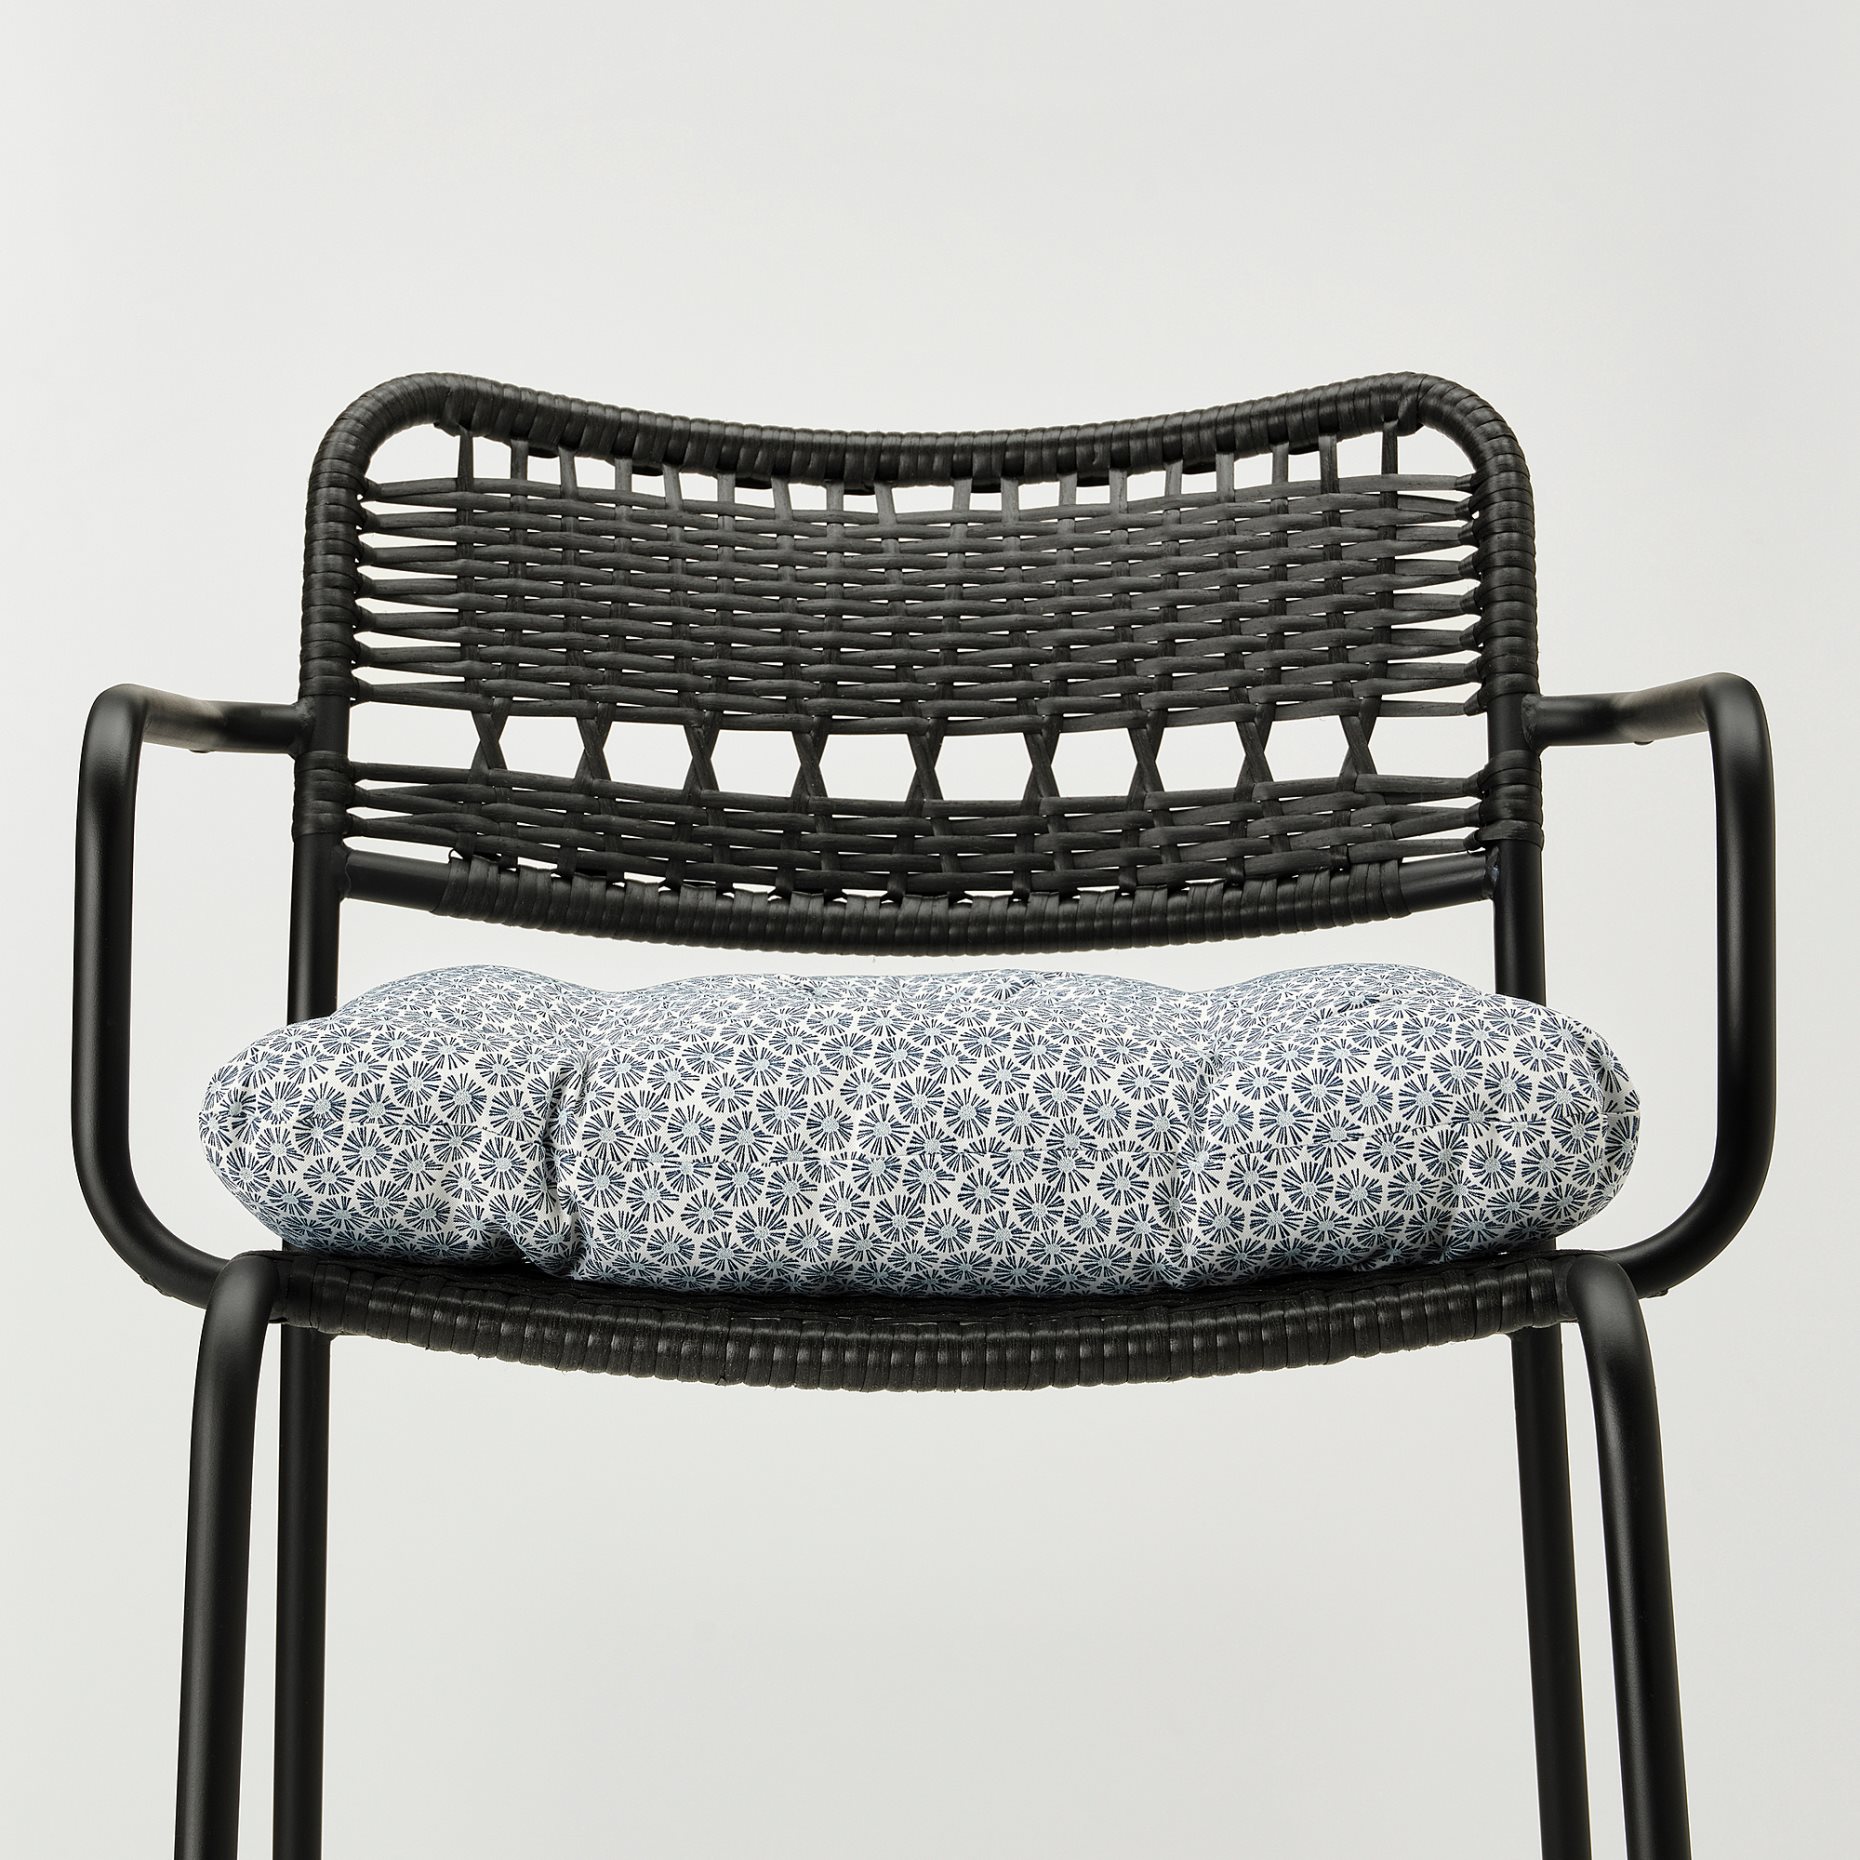 KLÖSAN, chair cushion outdoor, 44x44 cm, 805.041.05